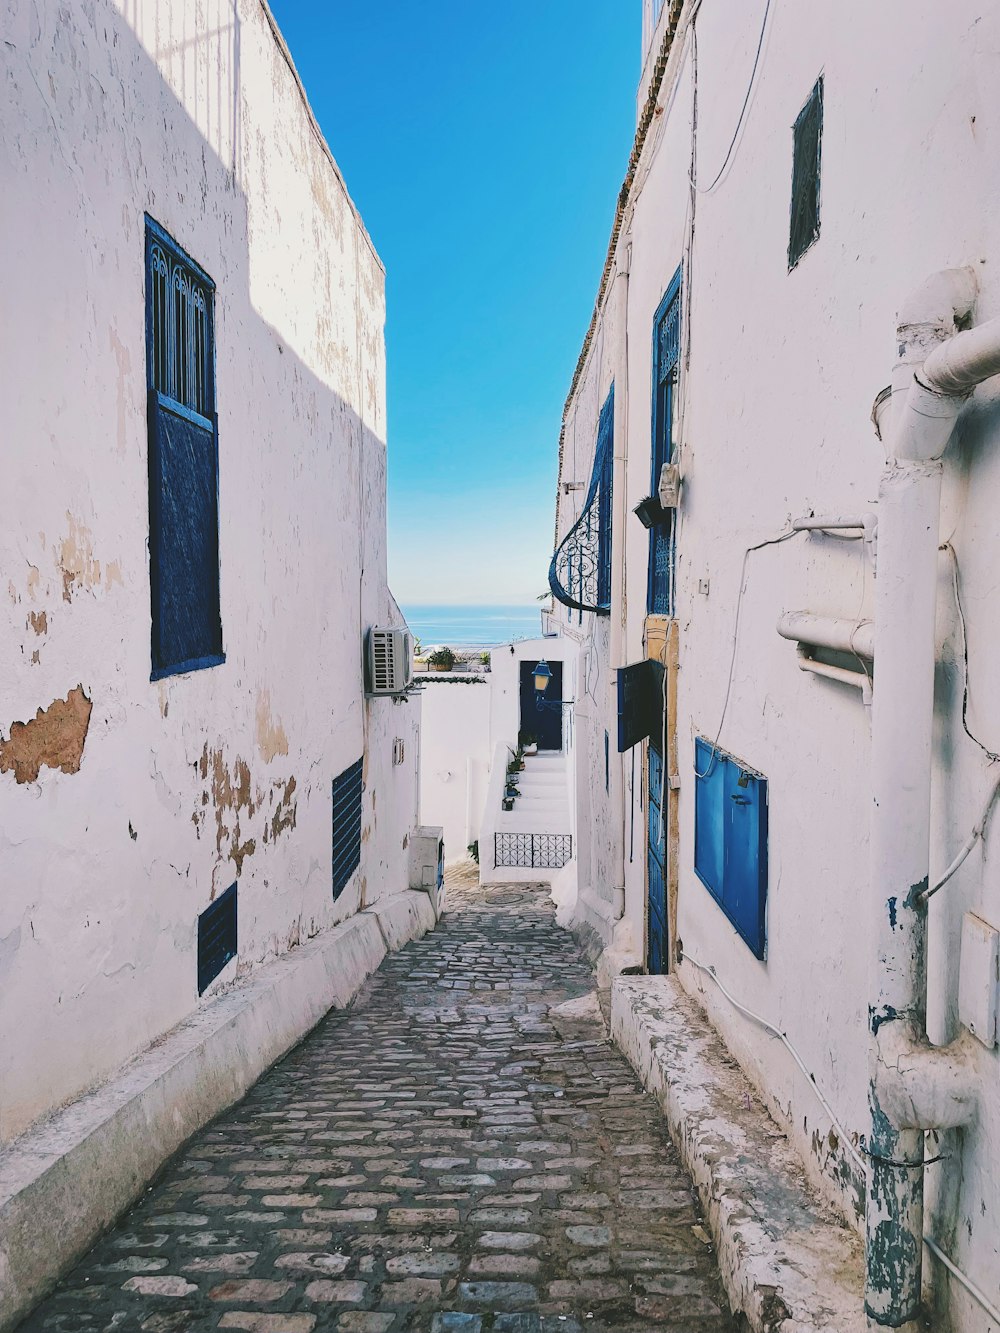 a narrow cobblestone street with blue windows